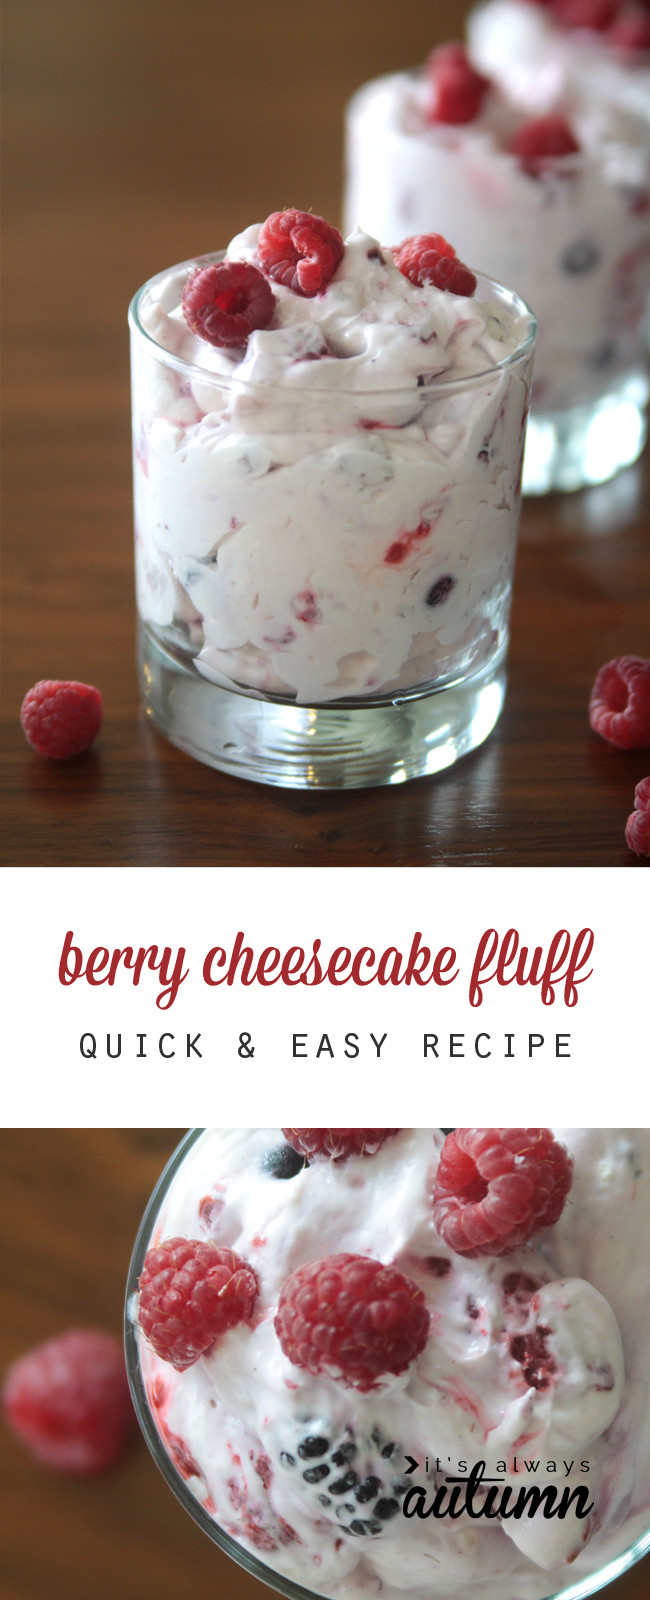 Quick Healthy Dessert Recipes
 berry cheesecake fluff a lighter holiday dessert It s